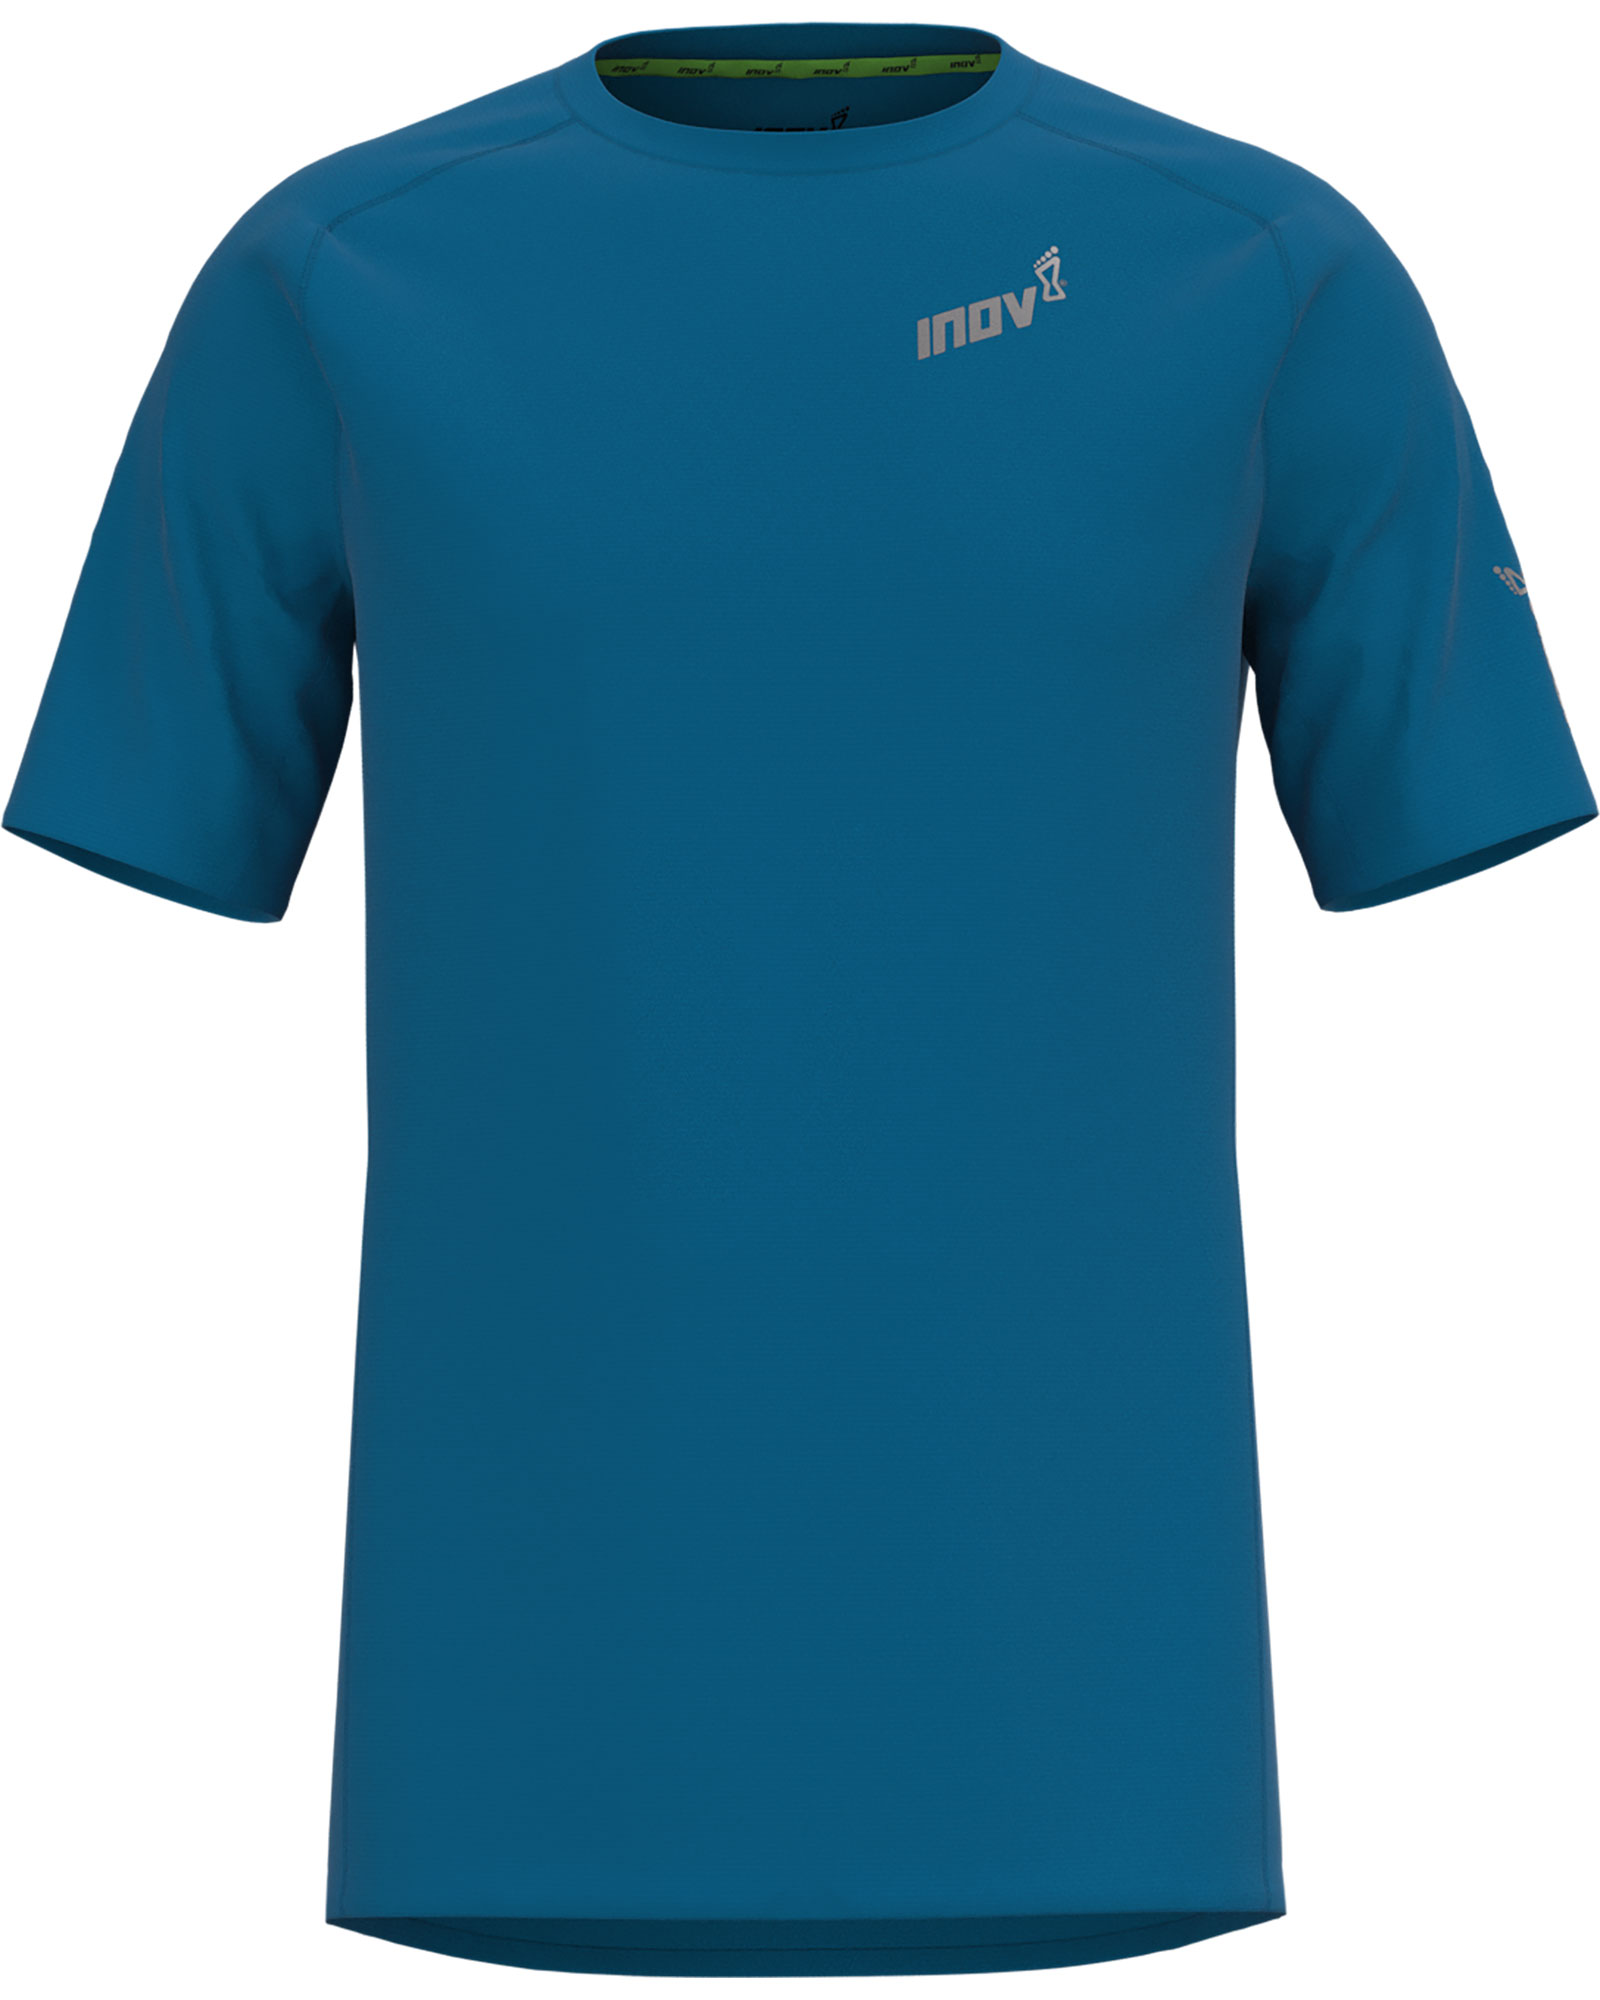 Inov 8 Base Elite Men’s T Shirt - Blue XL